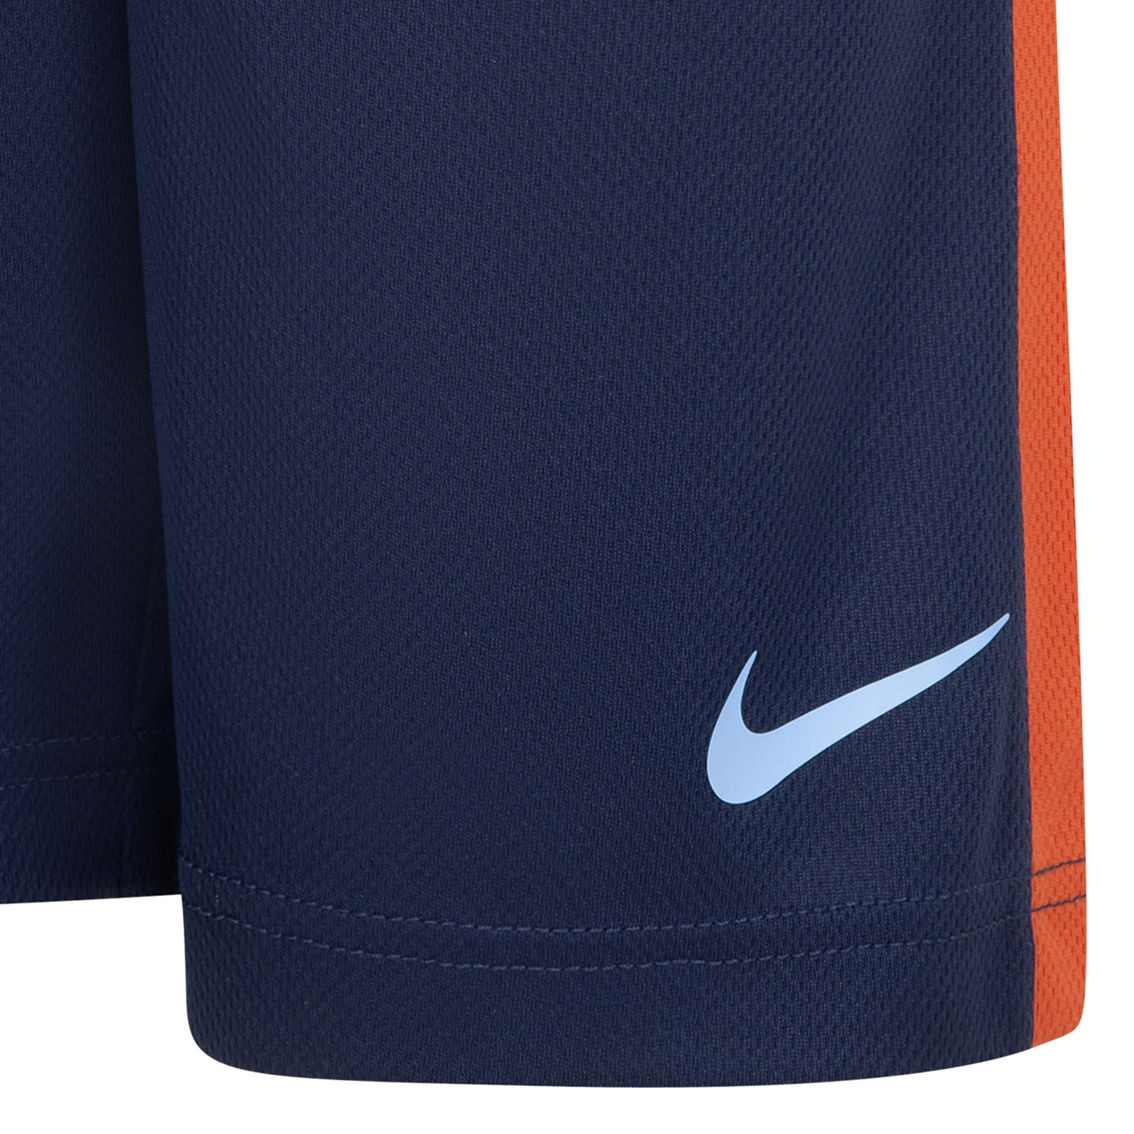 Nike Little Boy's Logo Dri-Fit Tee and Mesh Shorts 2 pc. Set - Image 6 of 6